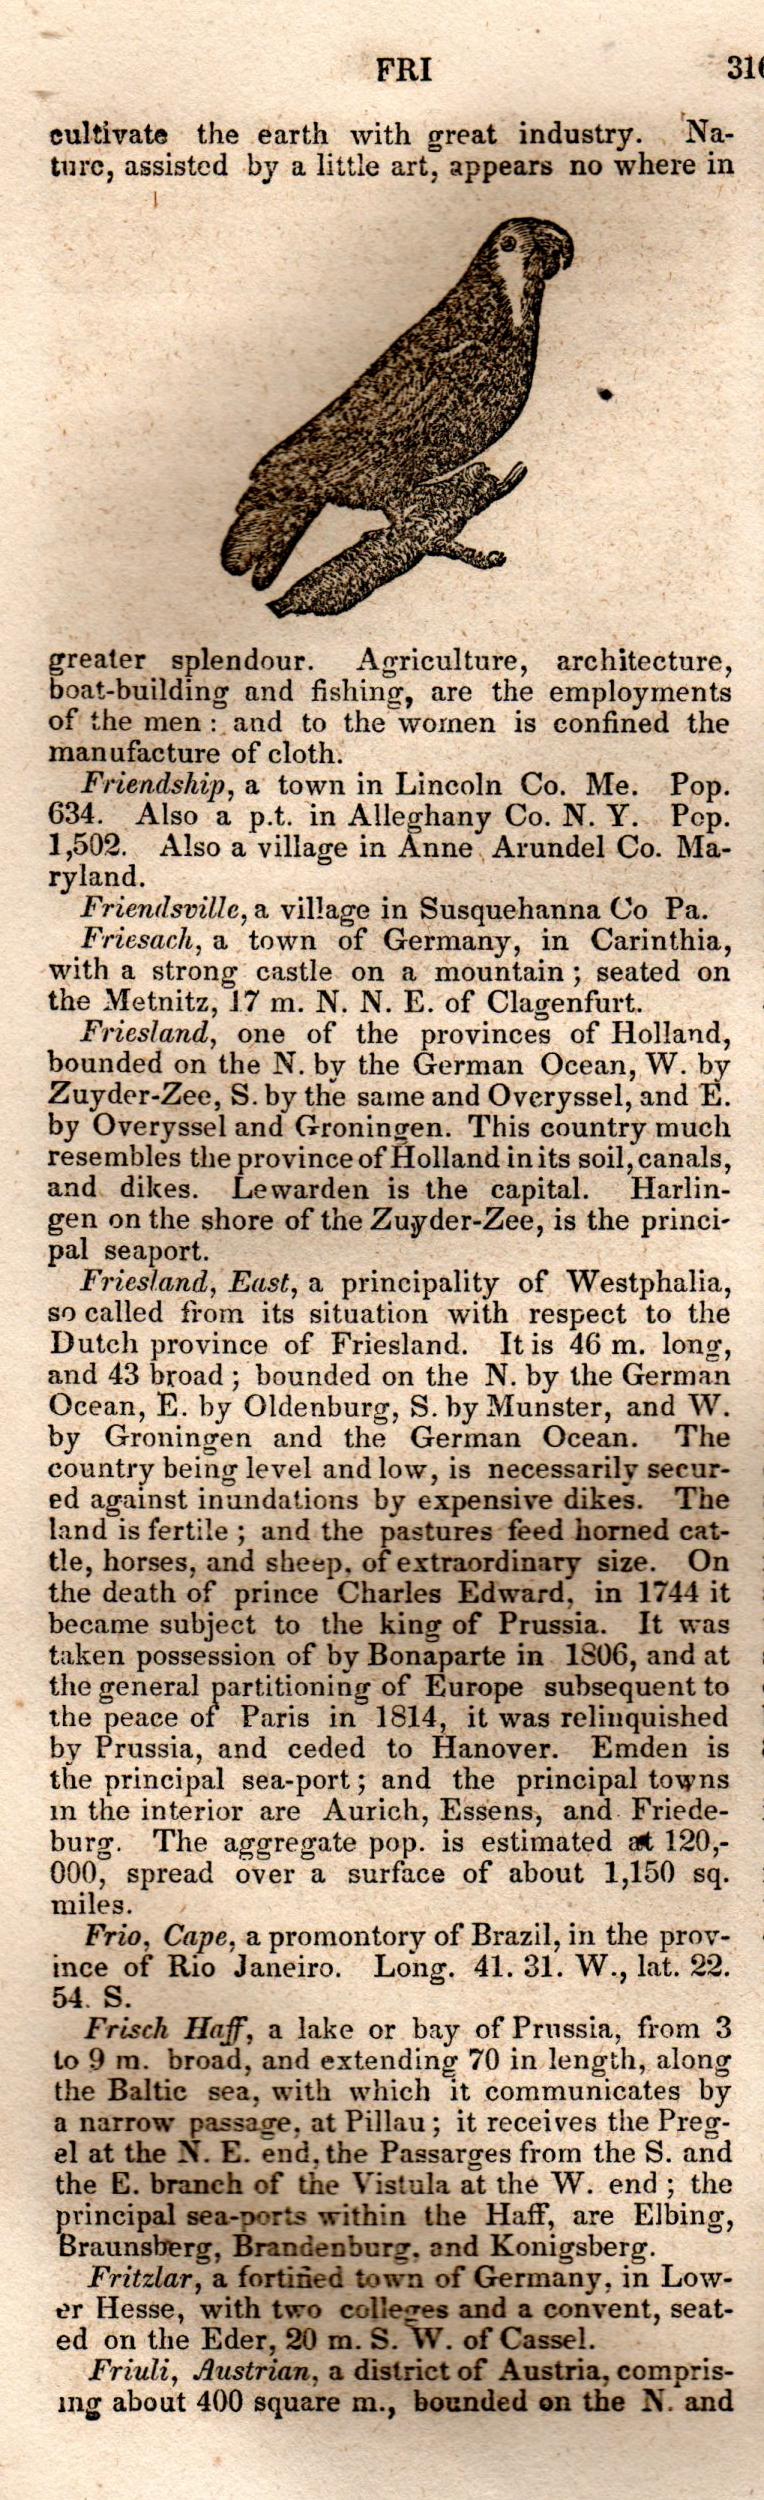 Brookes’ Universal Gazetteer (1850), Page 316 Left Column